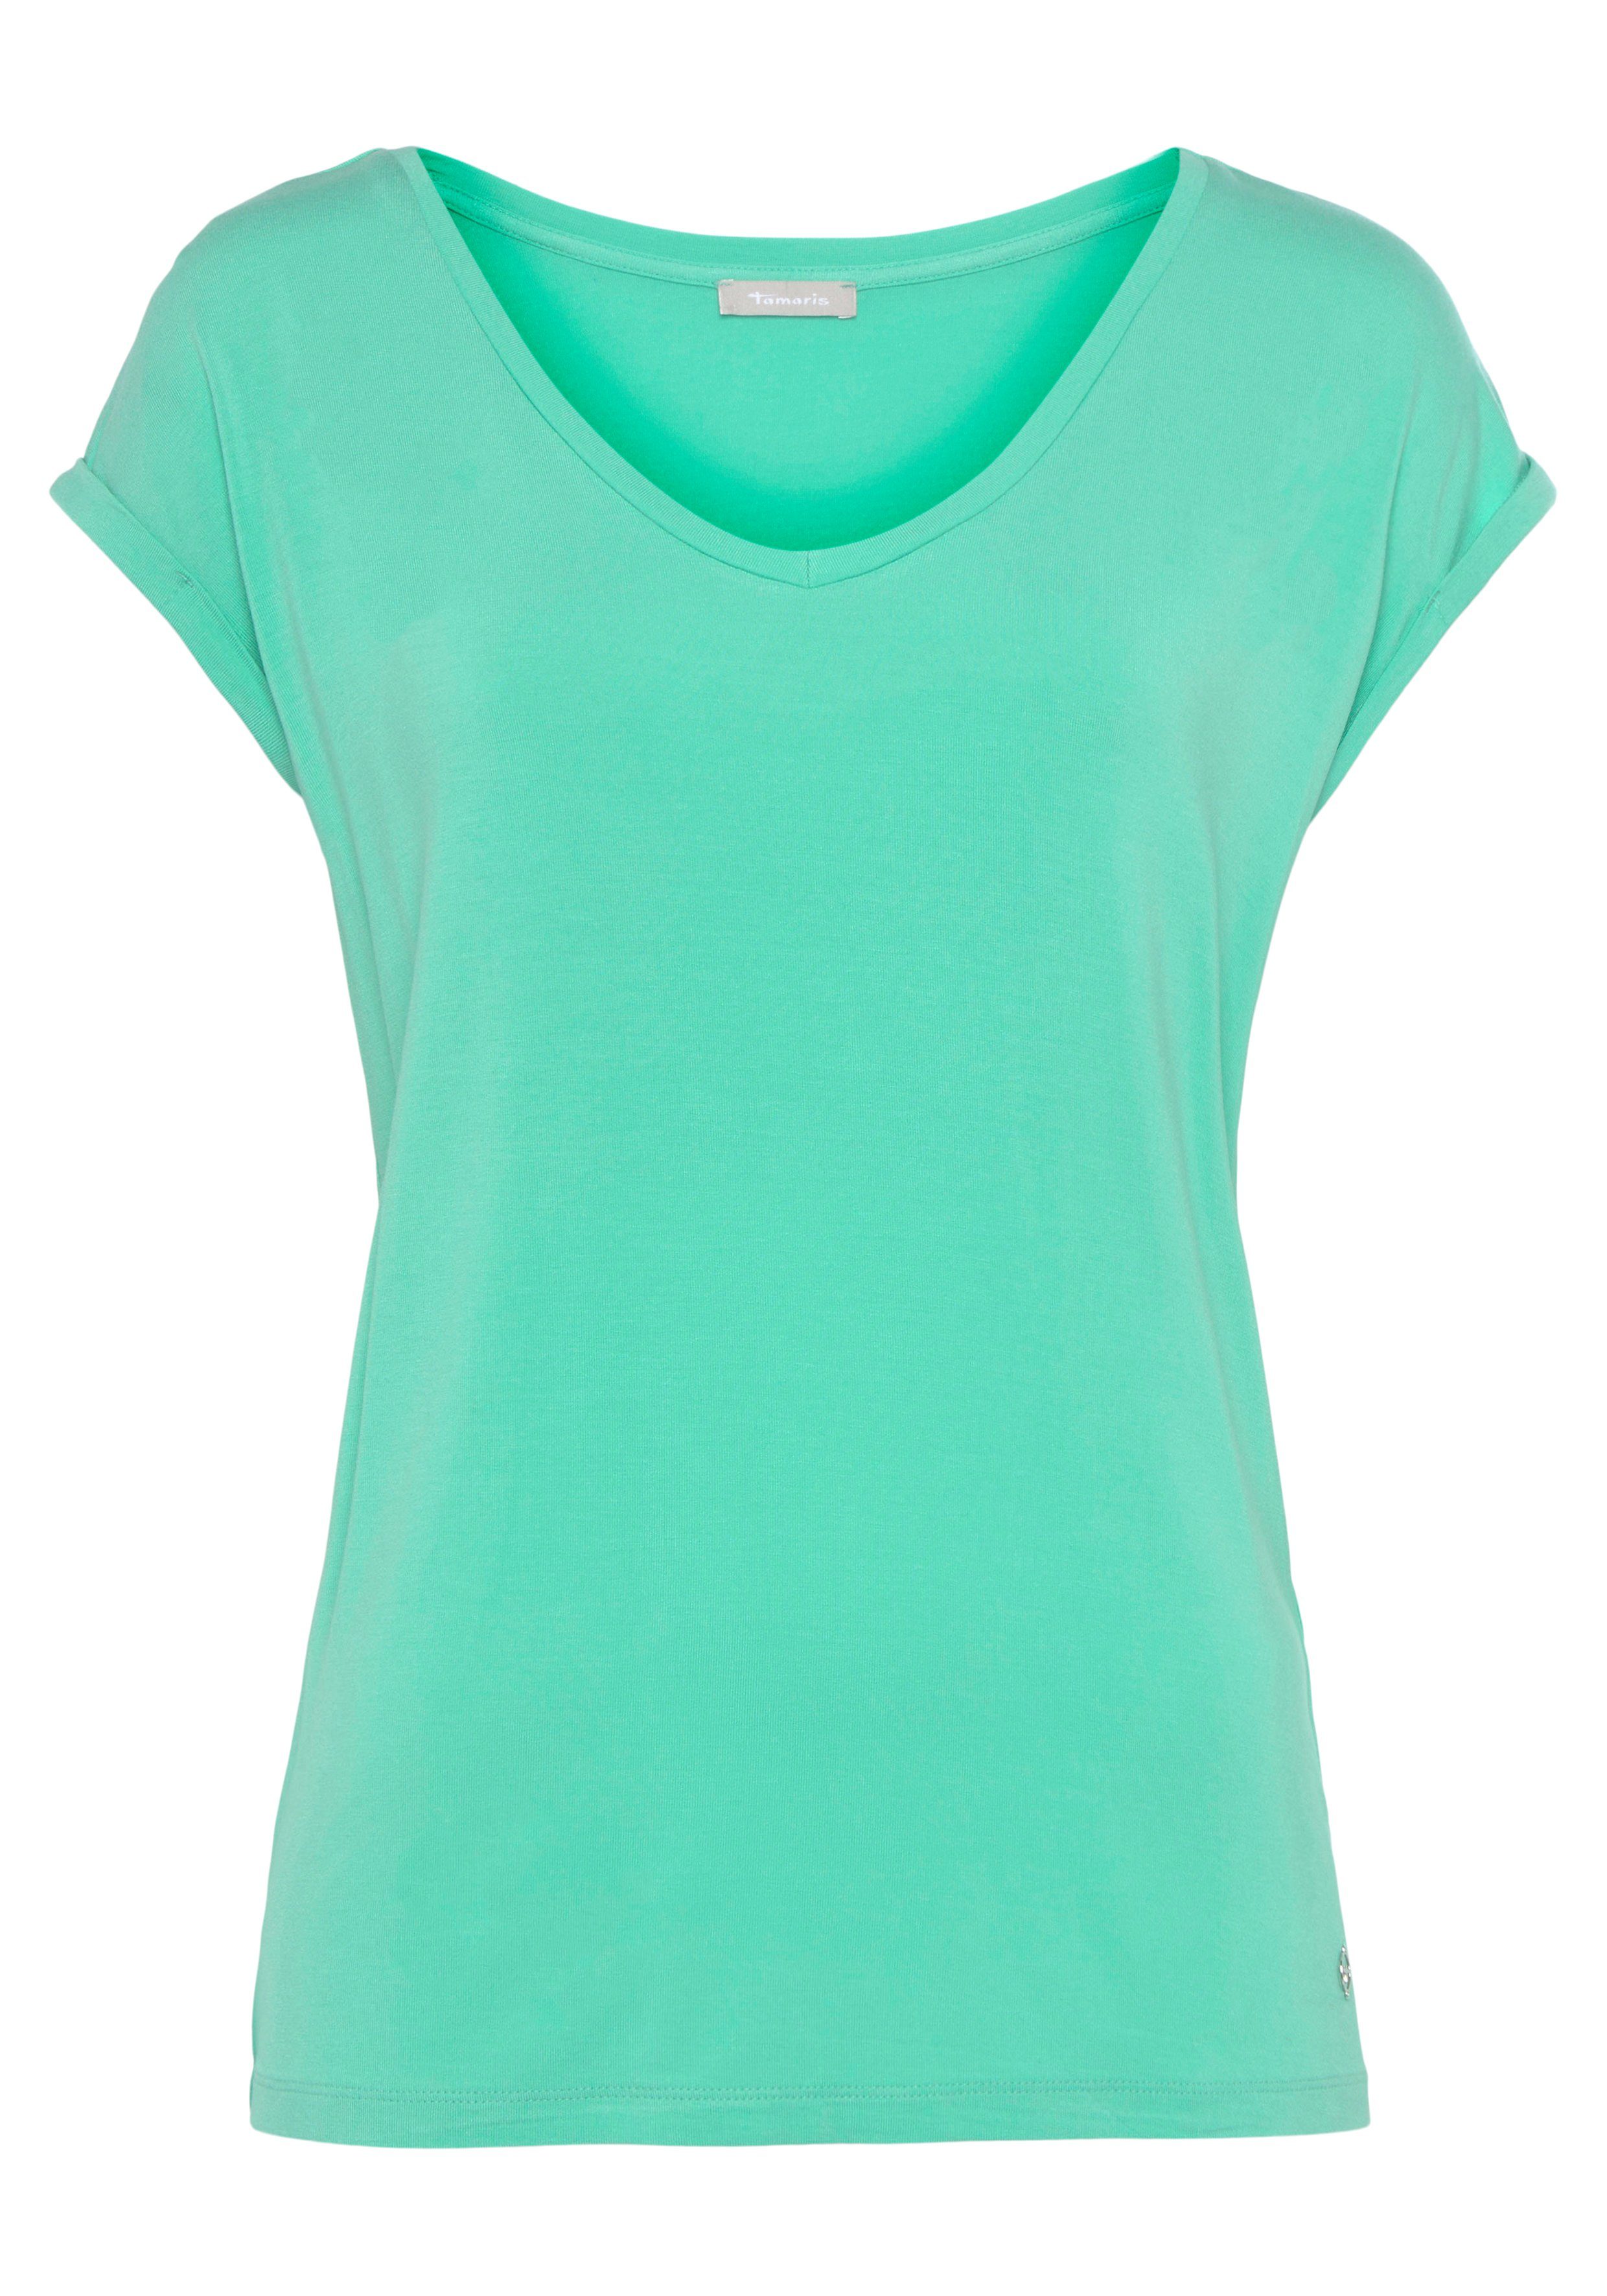 Tamaris V-Shirt Passform neonmint mit lockerer